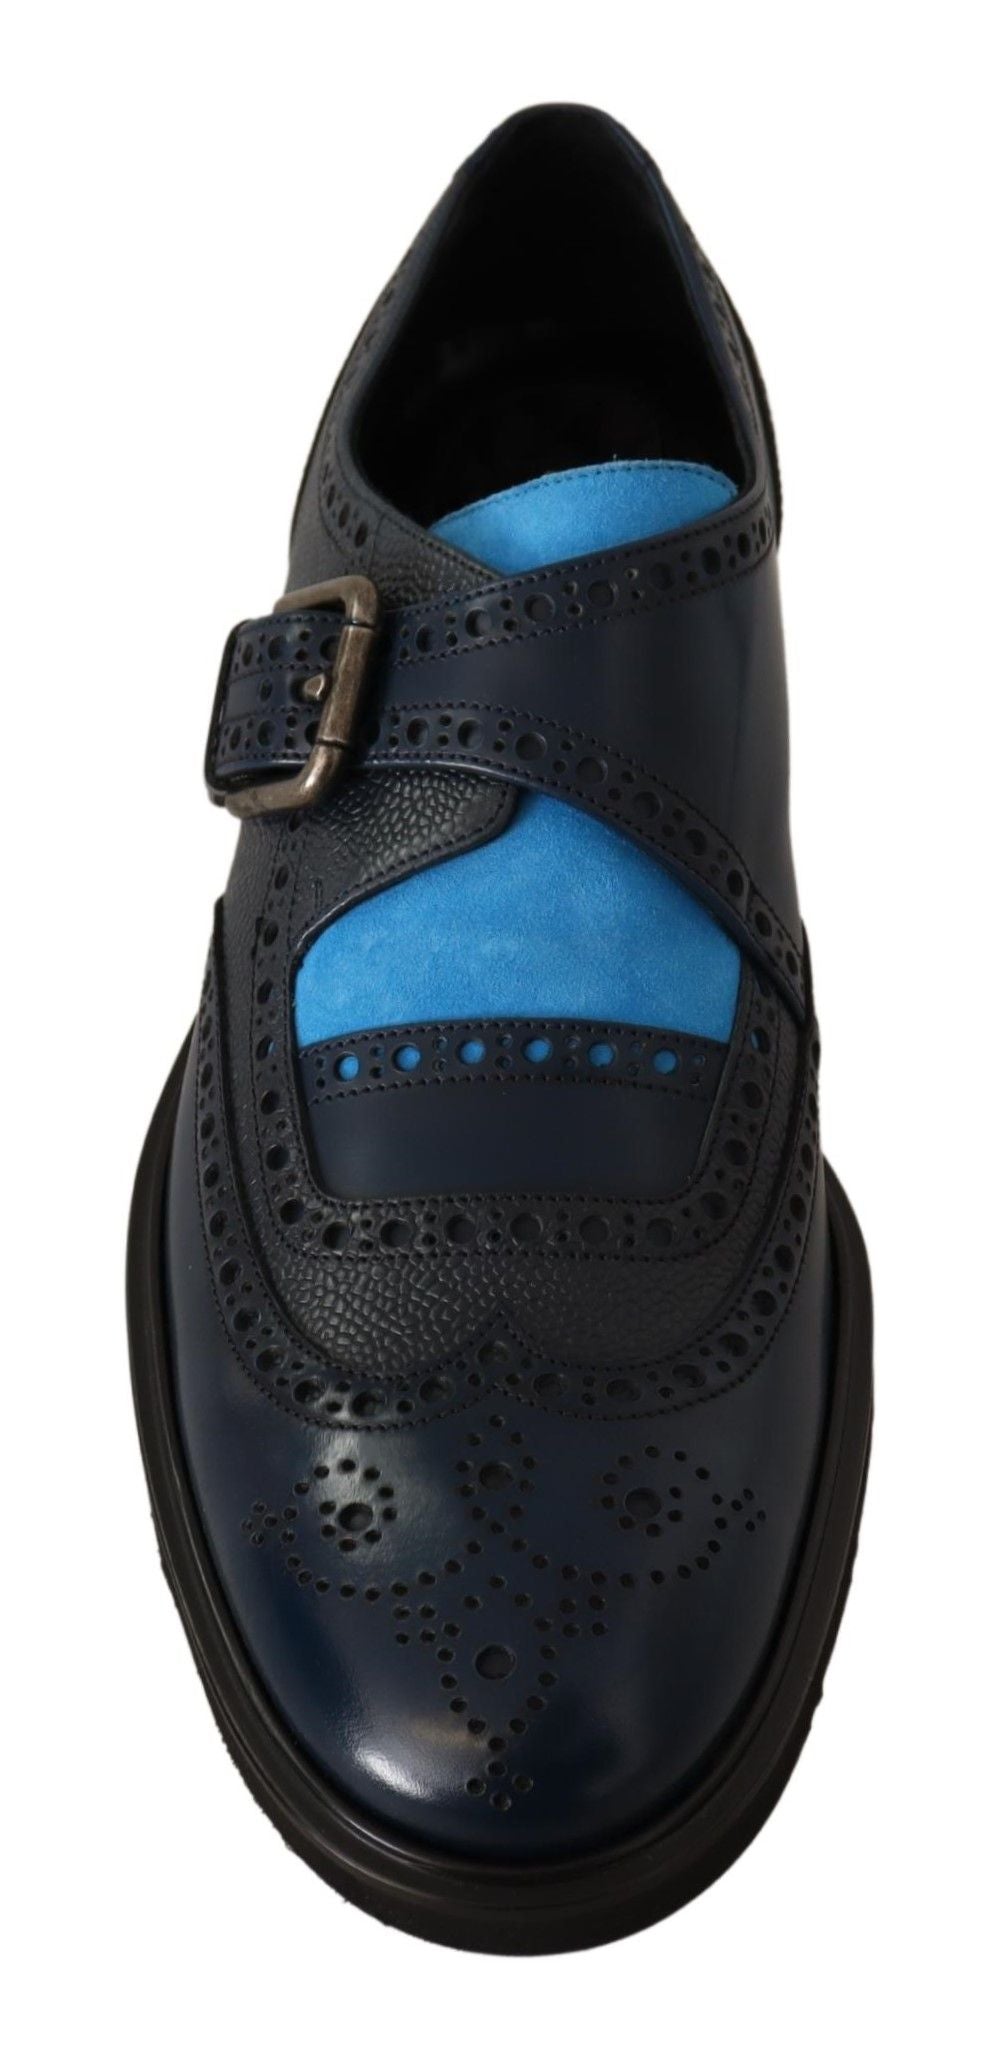 Elegant Blue Leather Monk Shoes